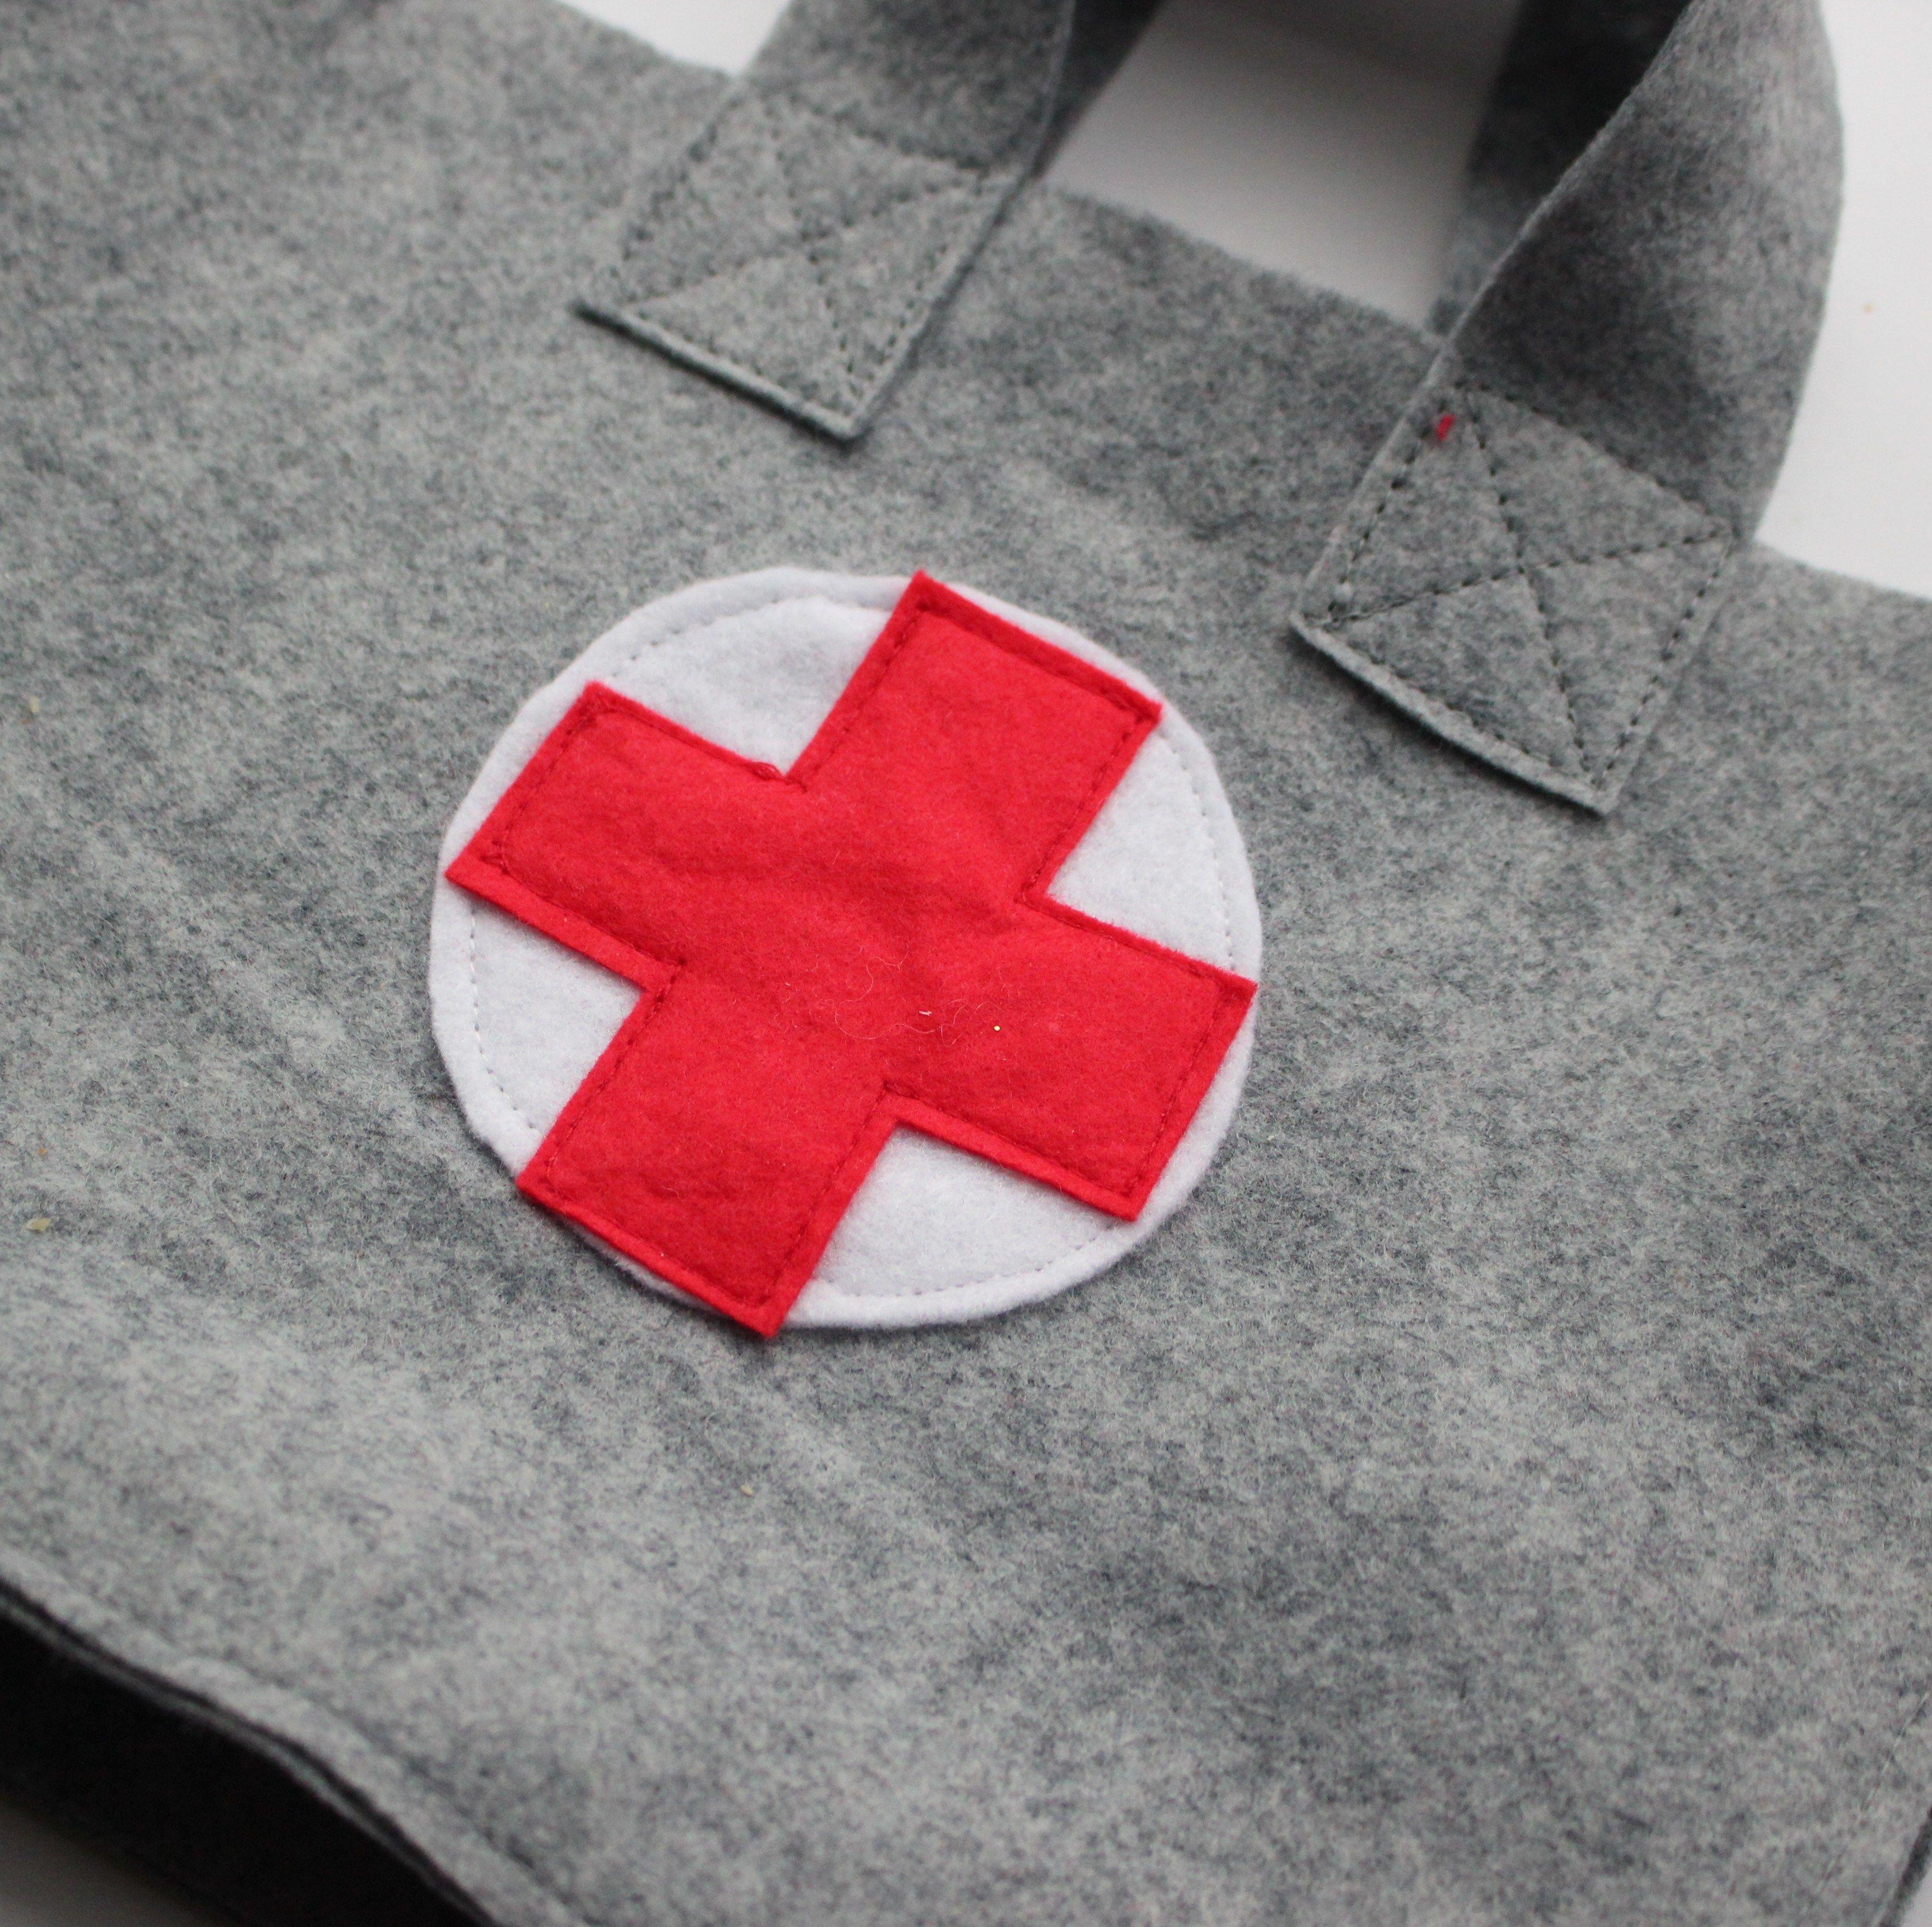 Sewing Red Cross Logo - DIY Toy Medical Kit Button Diaries